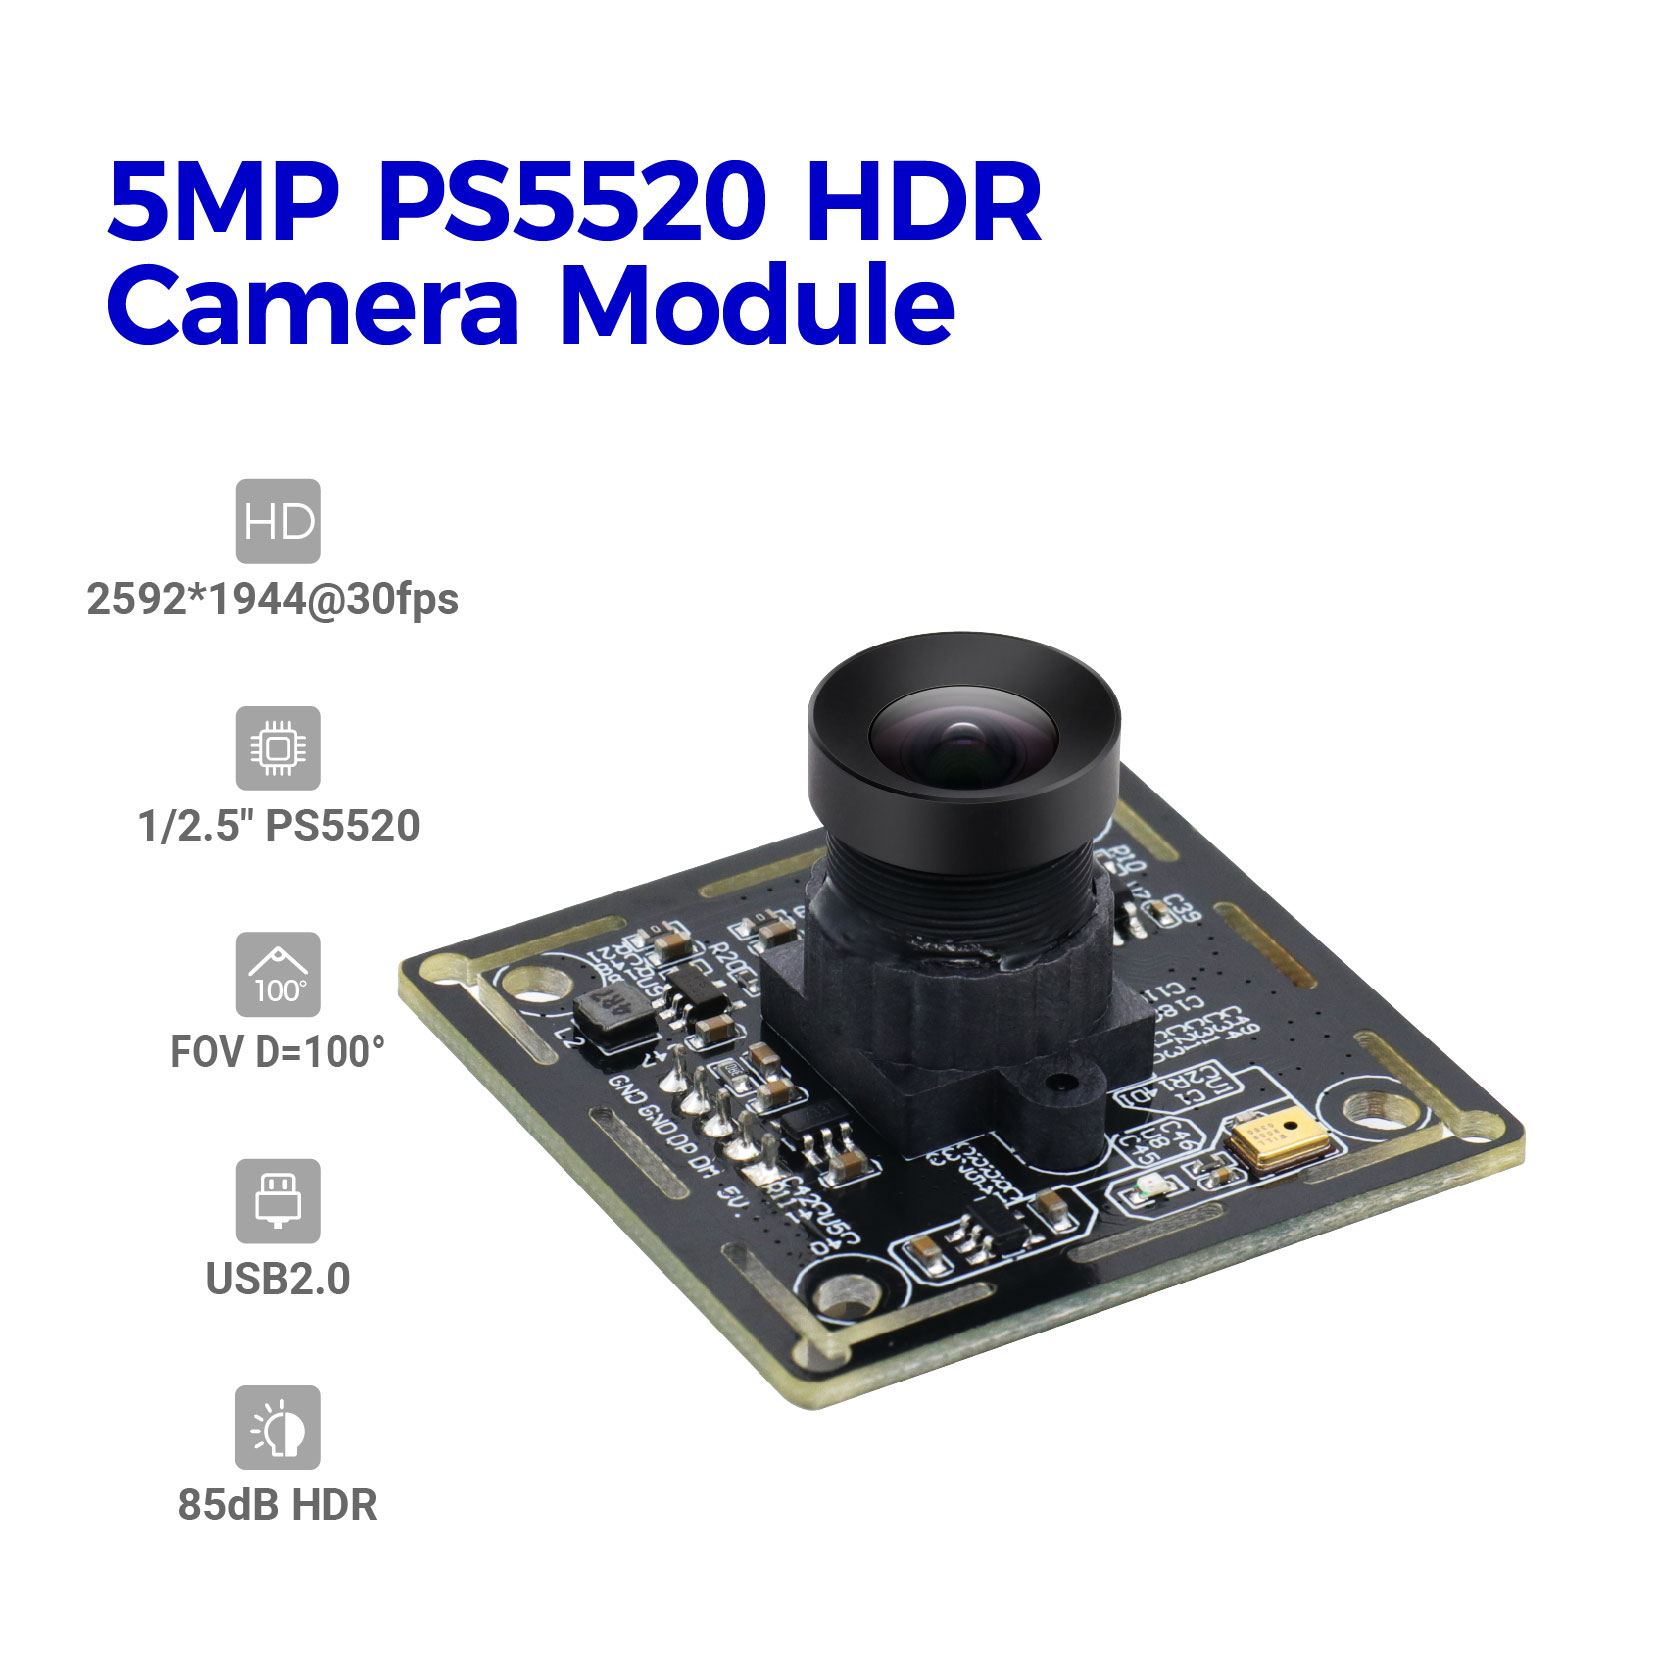 Moduli i kamerës 5MP PS5520 HDR